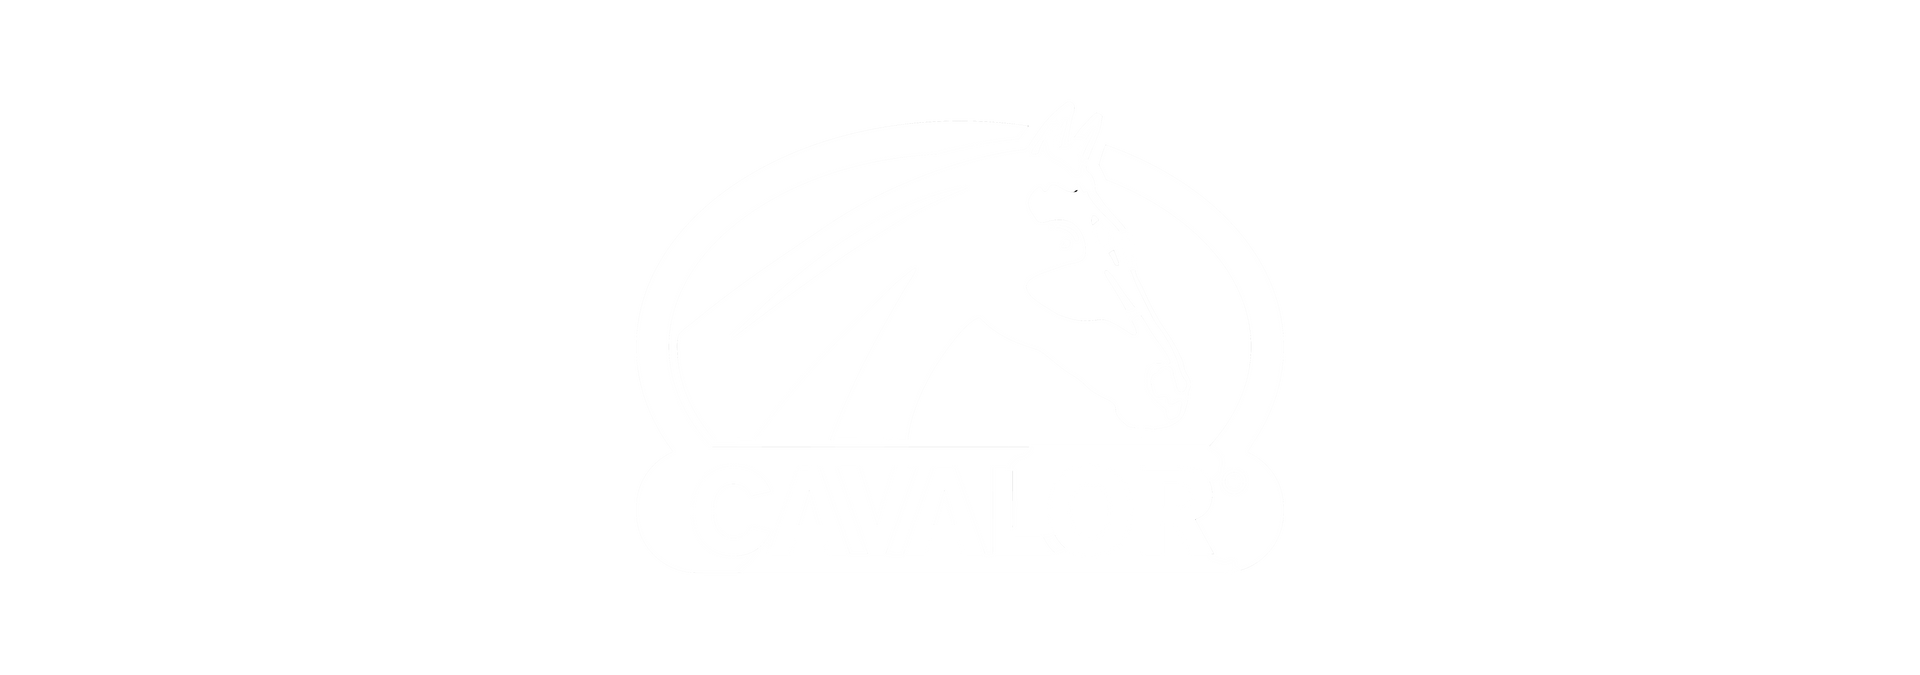 Cavalor